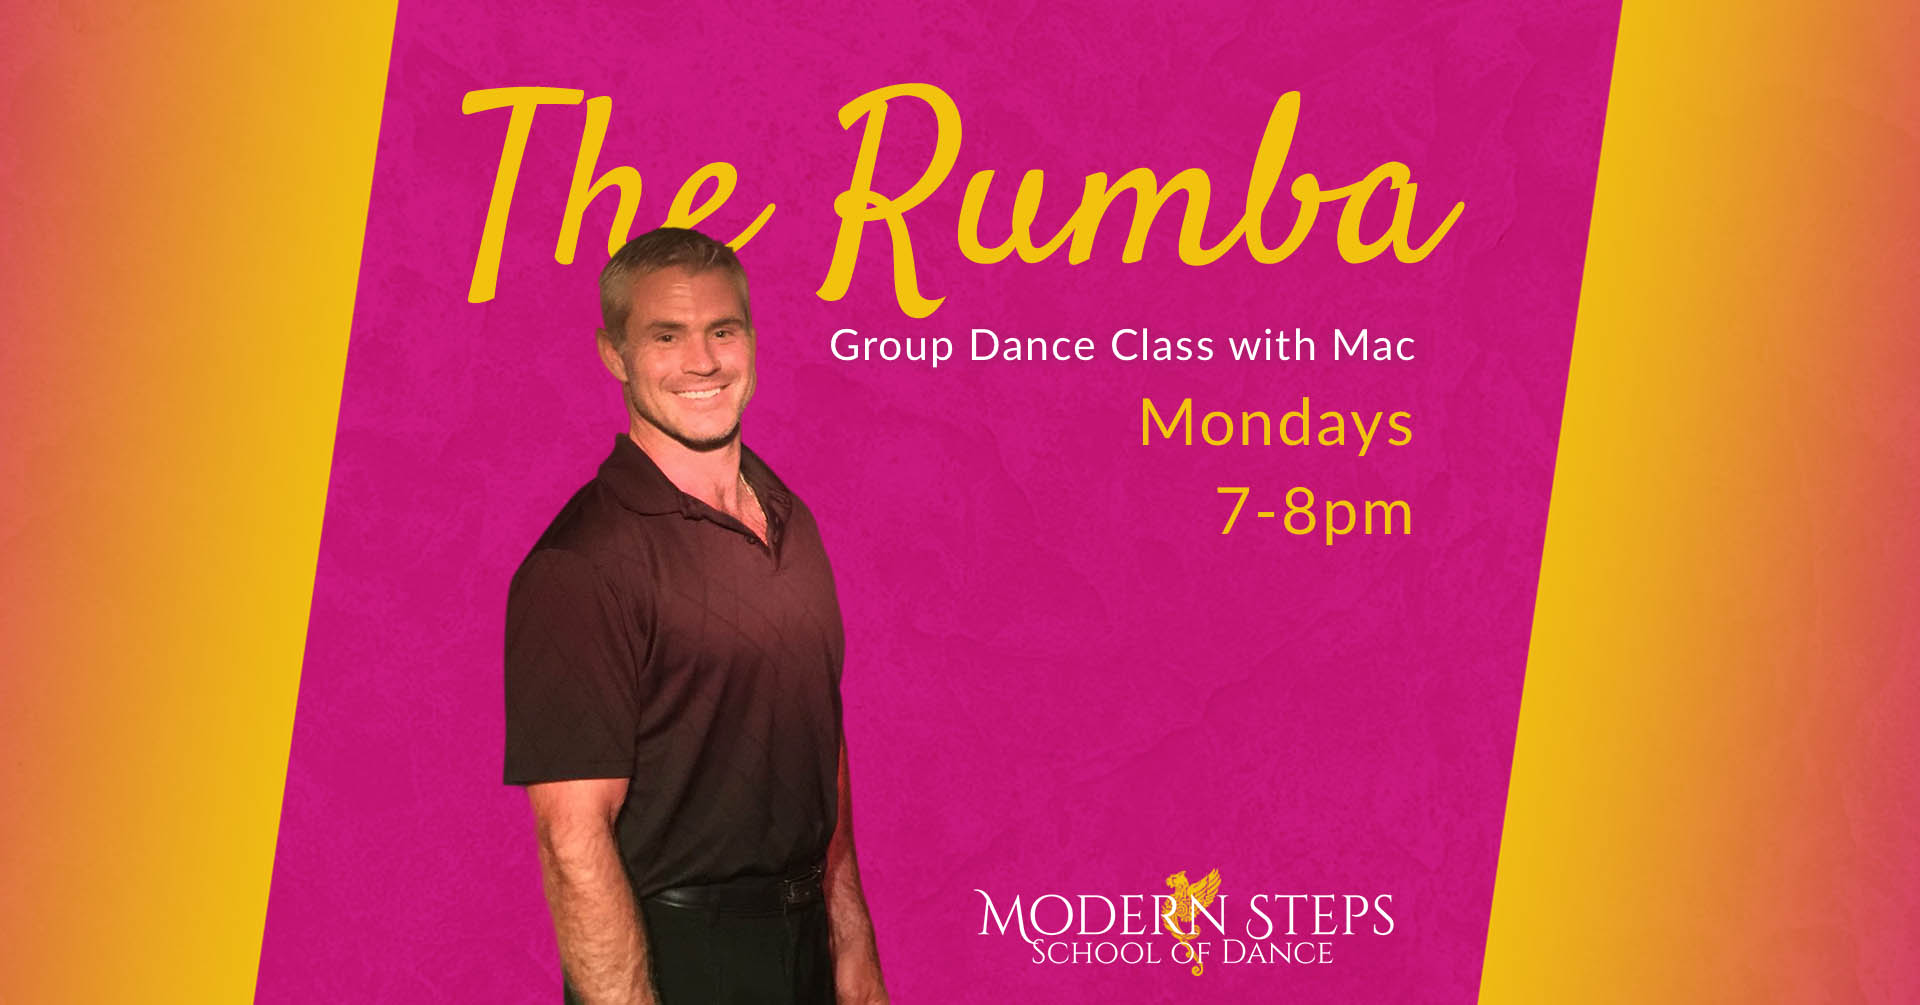 Modern Steps School of Dance Naples Florida The Rumba Dance Classes - Group Ballroom Dance Lessons